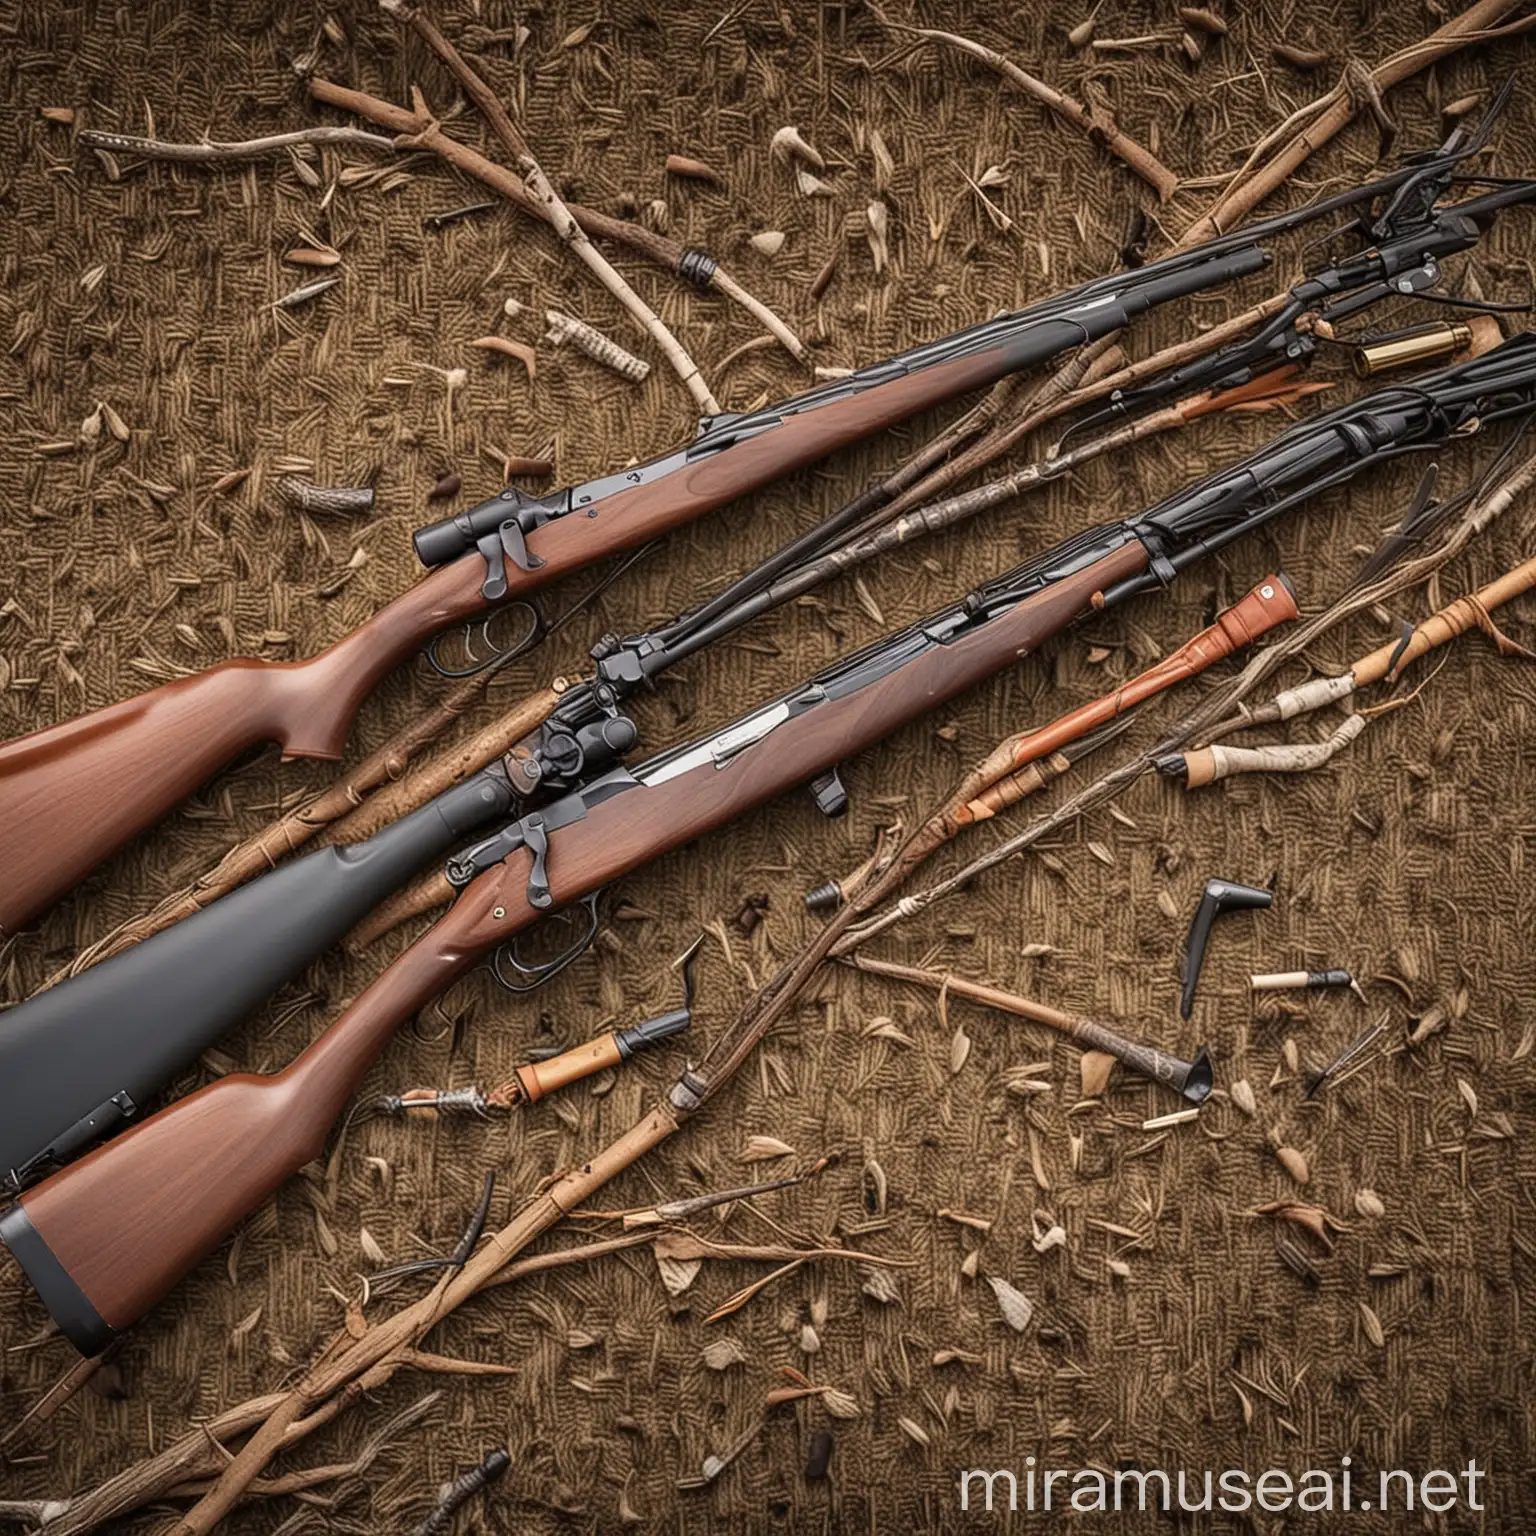 Variety of Hunting Guns NonRifle and NonShotgun Options